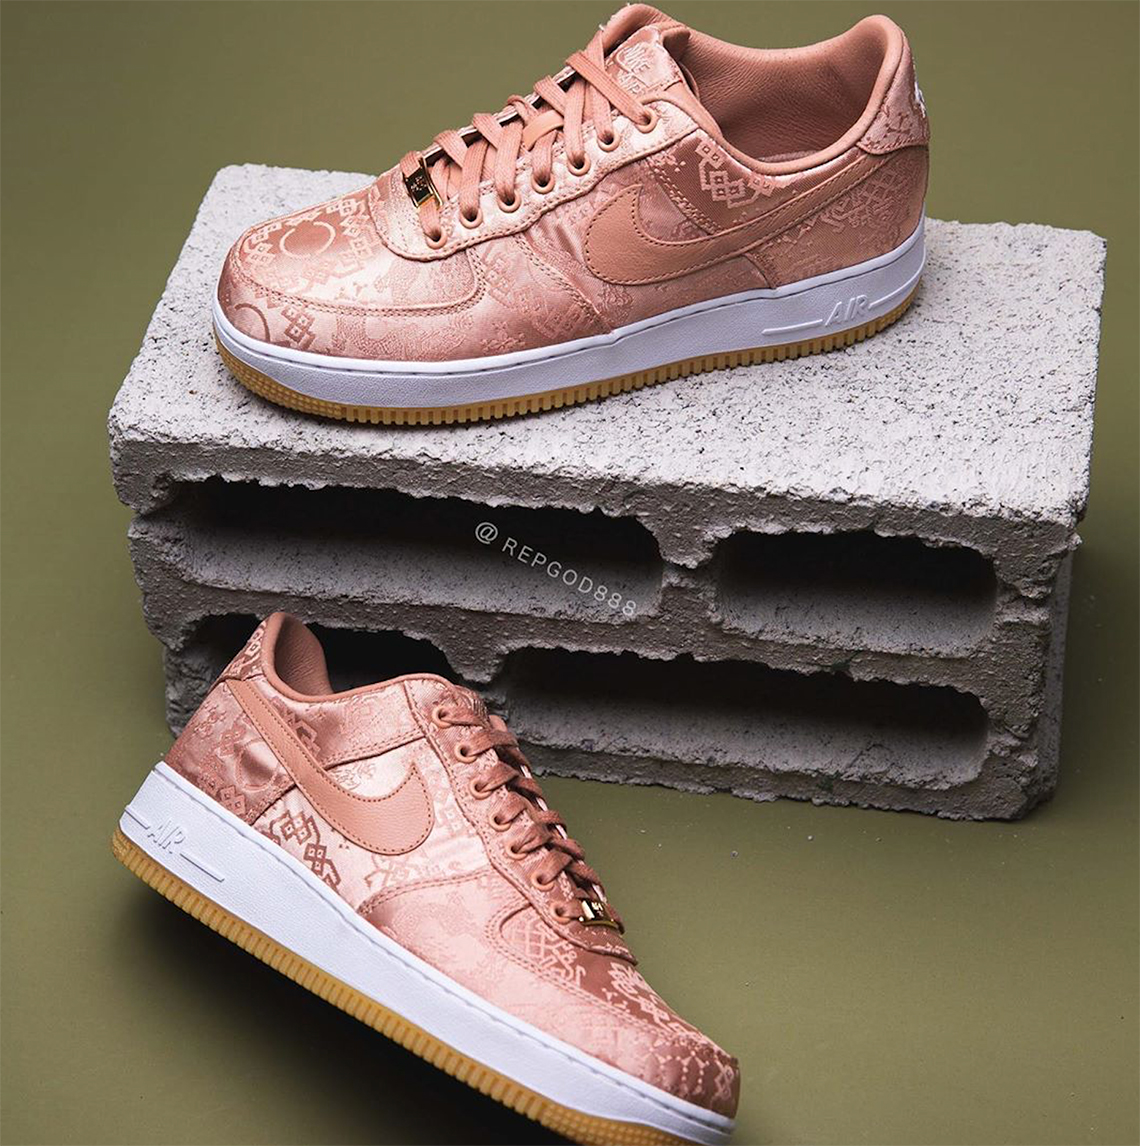 CLOT Nike Air Force 1 Low Rose Gold CJ5290-600 | SneakerNews.com